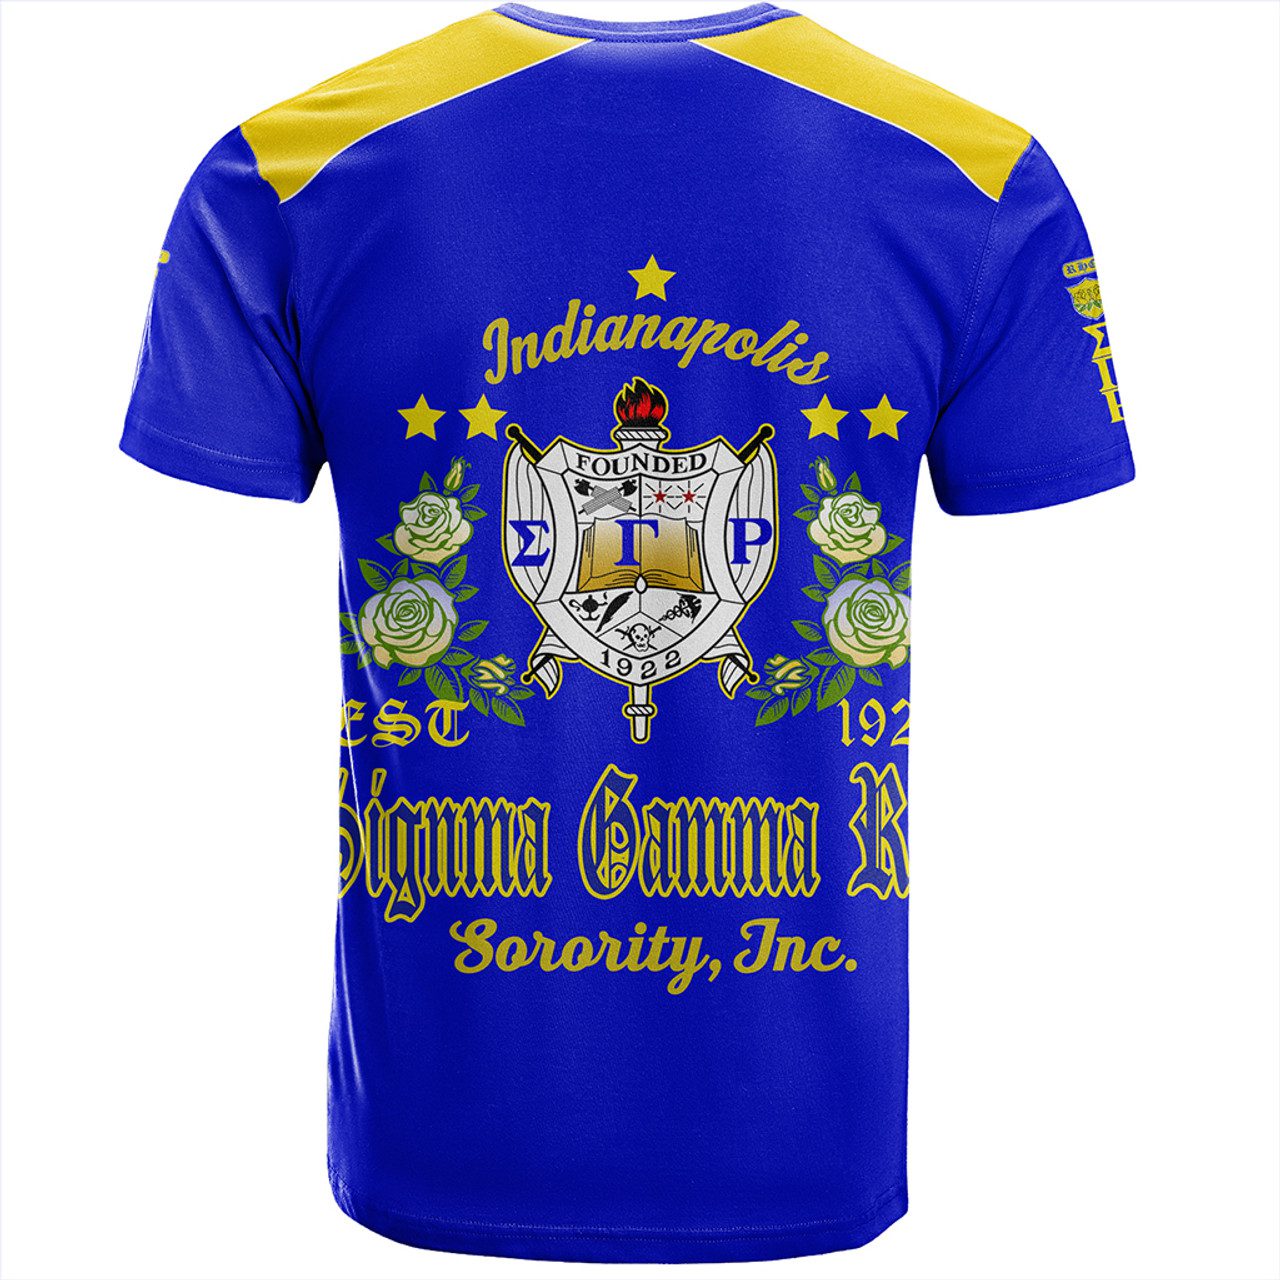 Sigma Gamma Rho T-Shirt Indianapolis